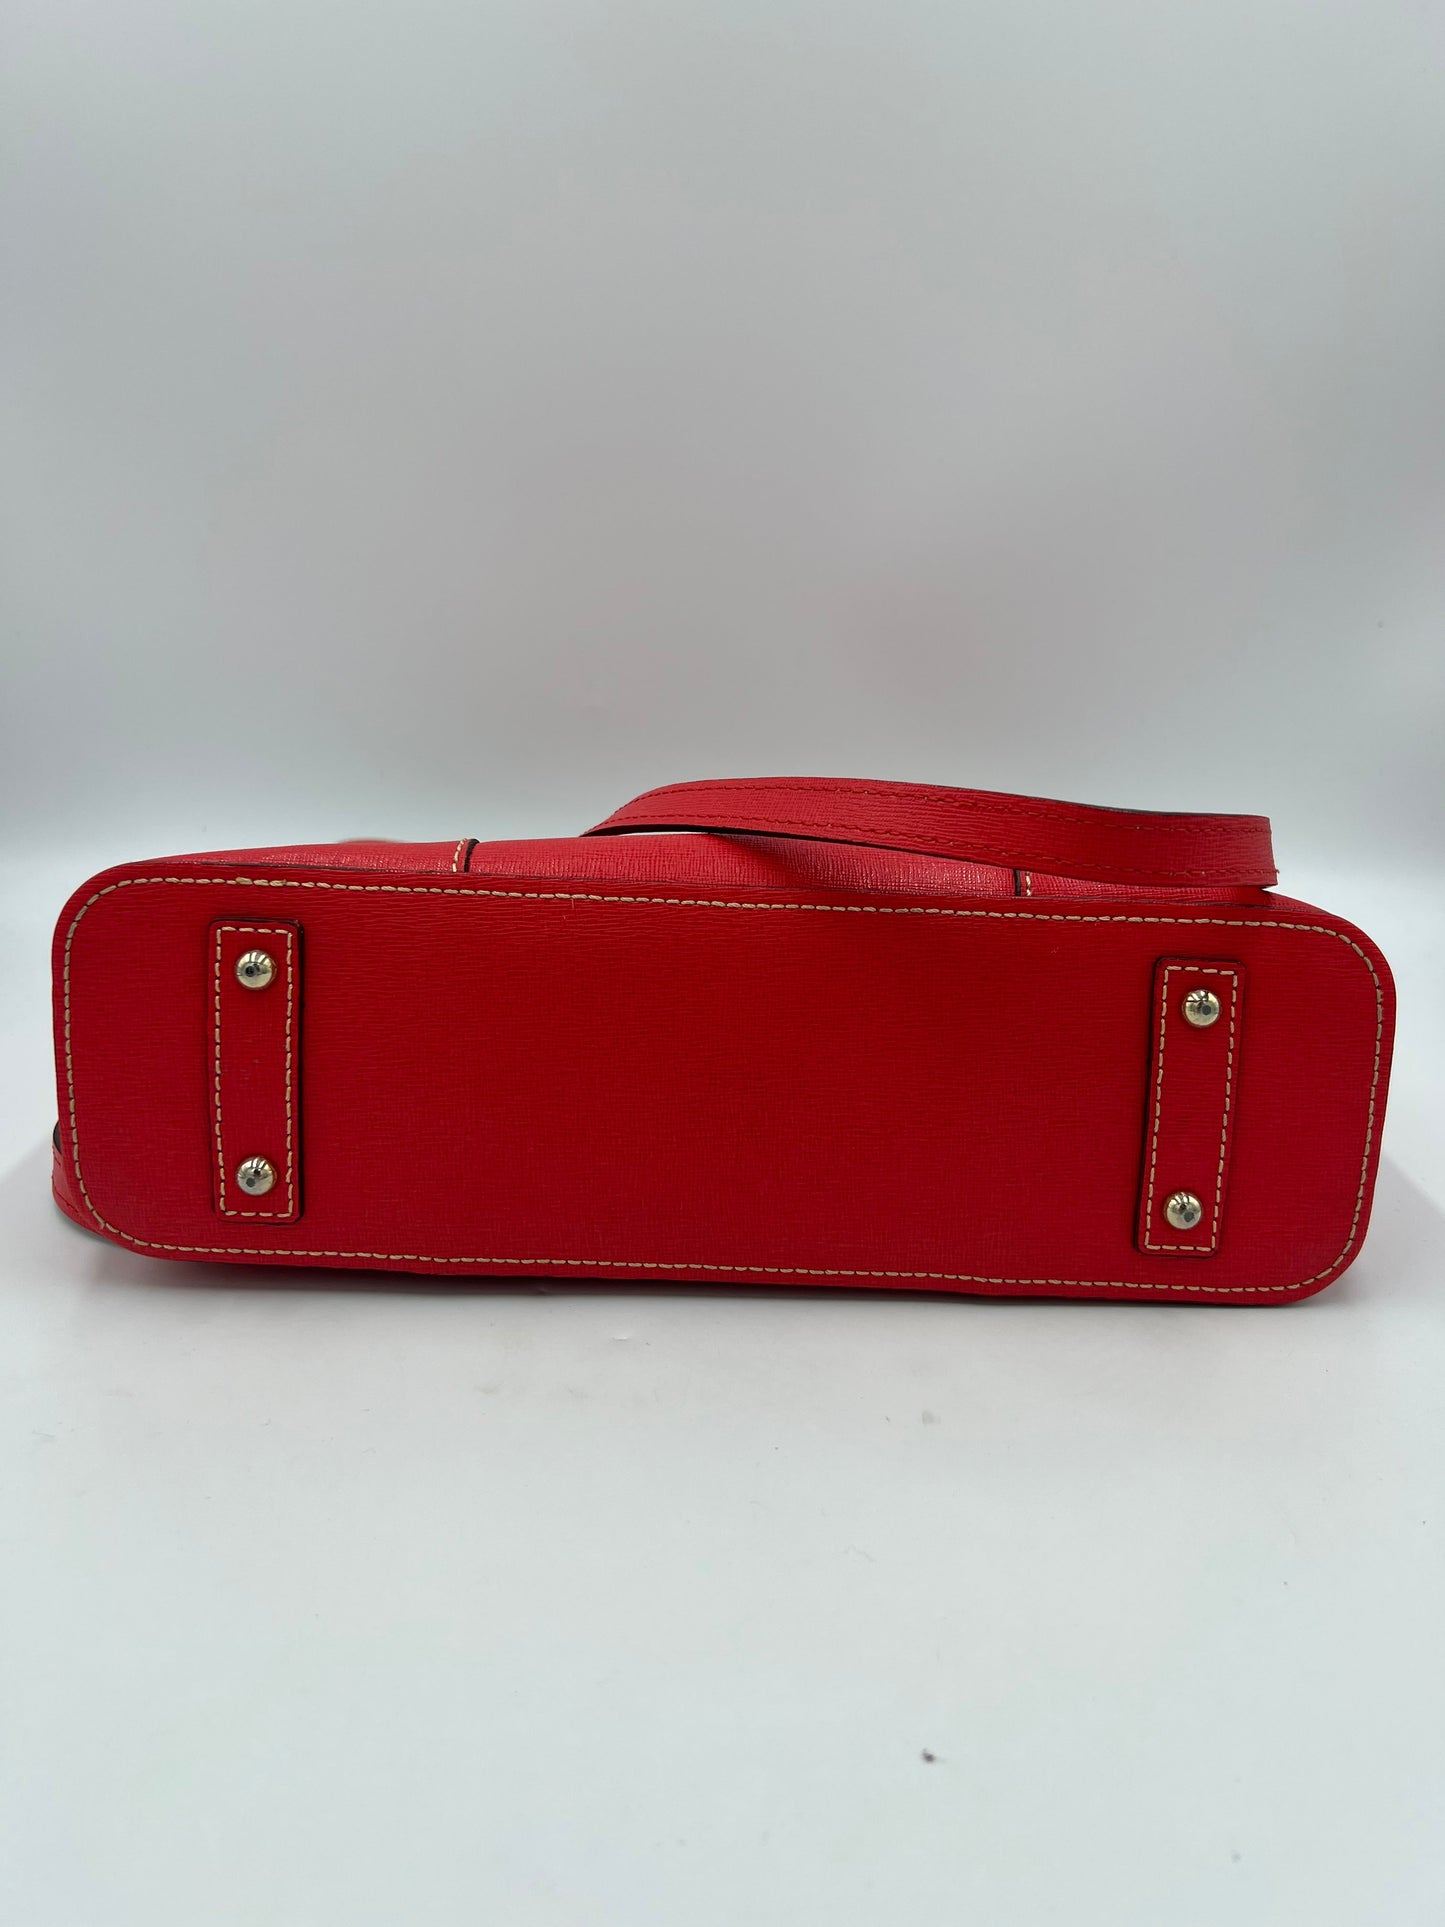 Handbag Designer By Dooney And Bourke